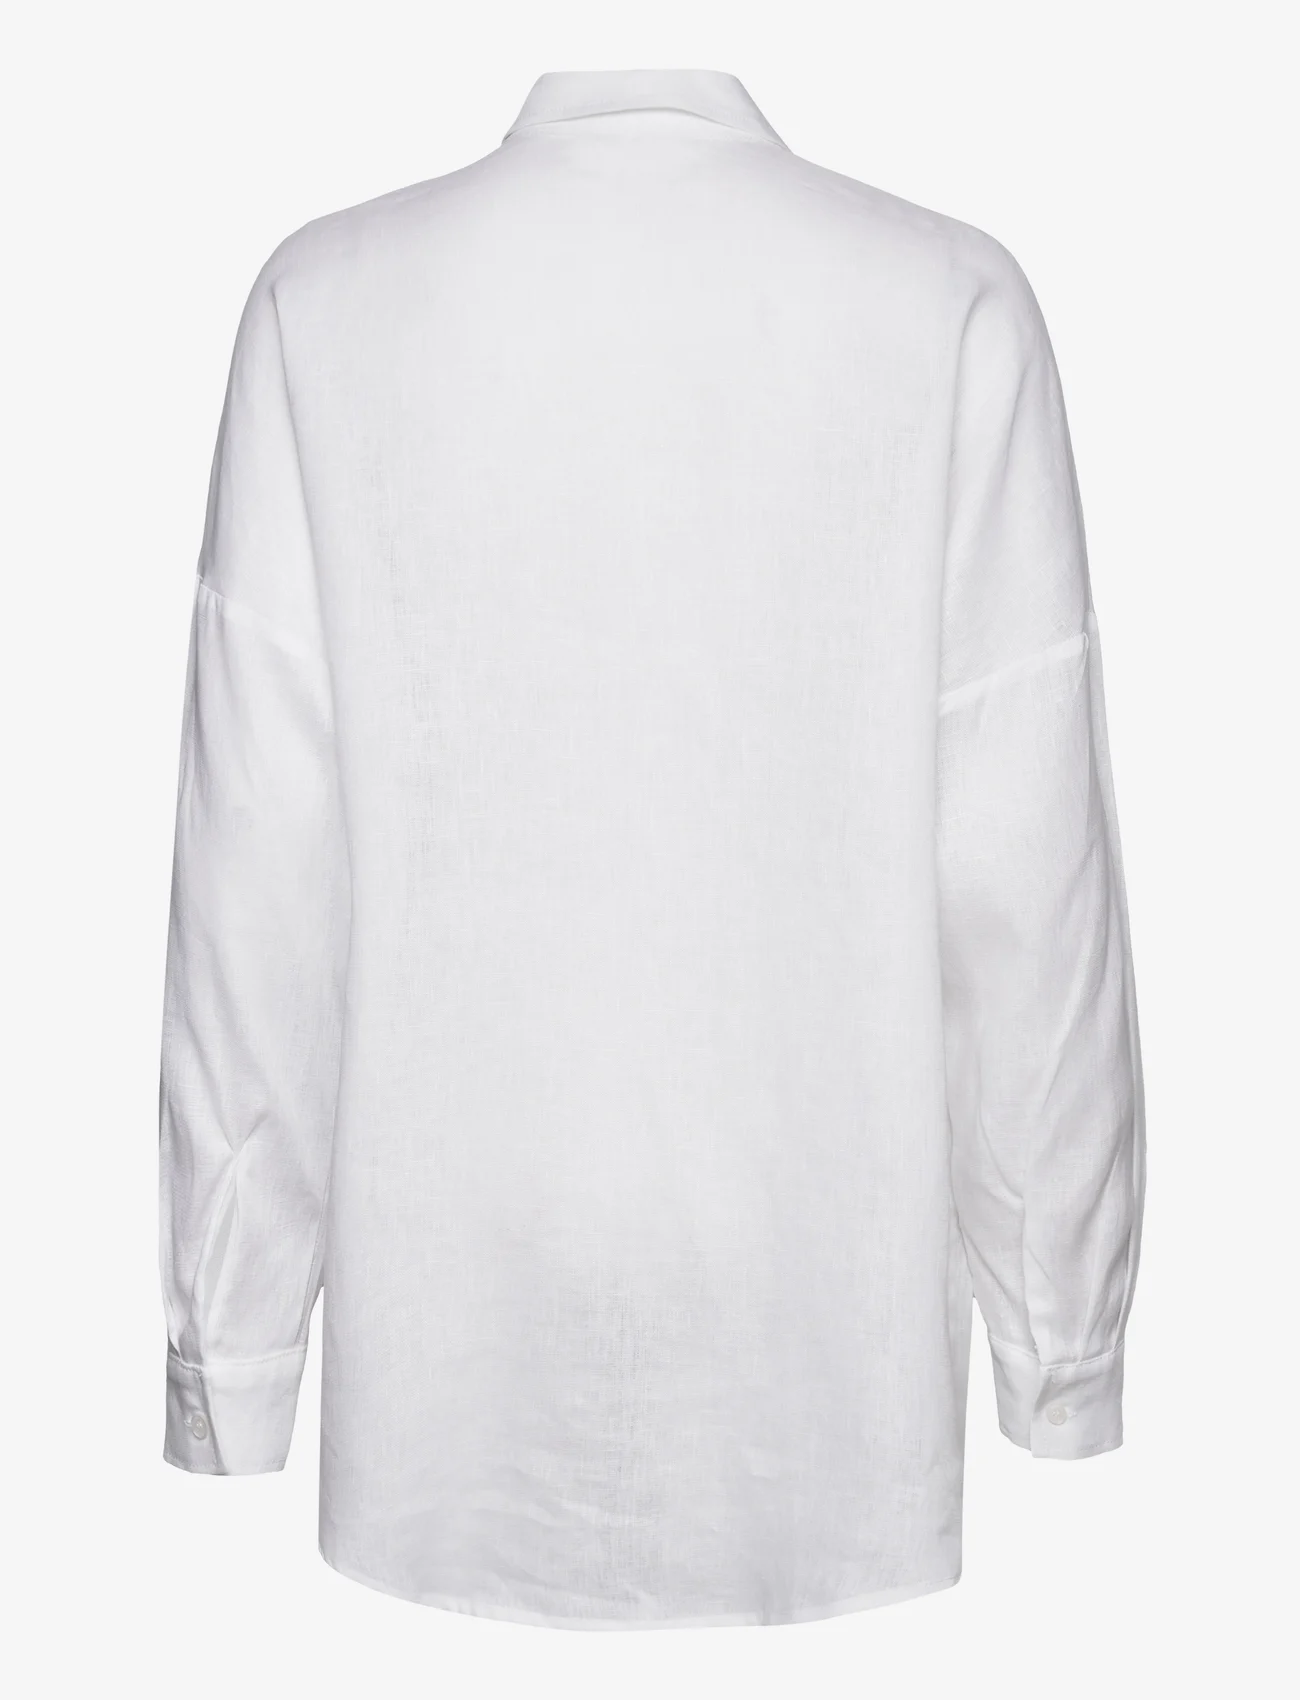 LEBRAND - BILBAO LINEN SHIRT - langärmlige hemden - white - 1